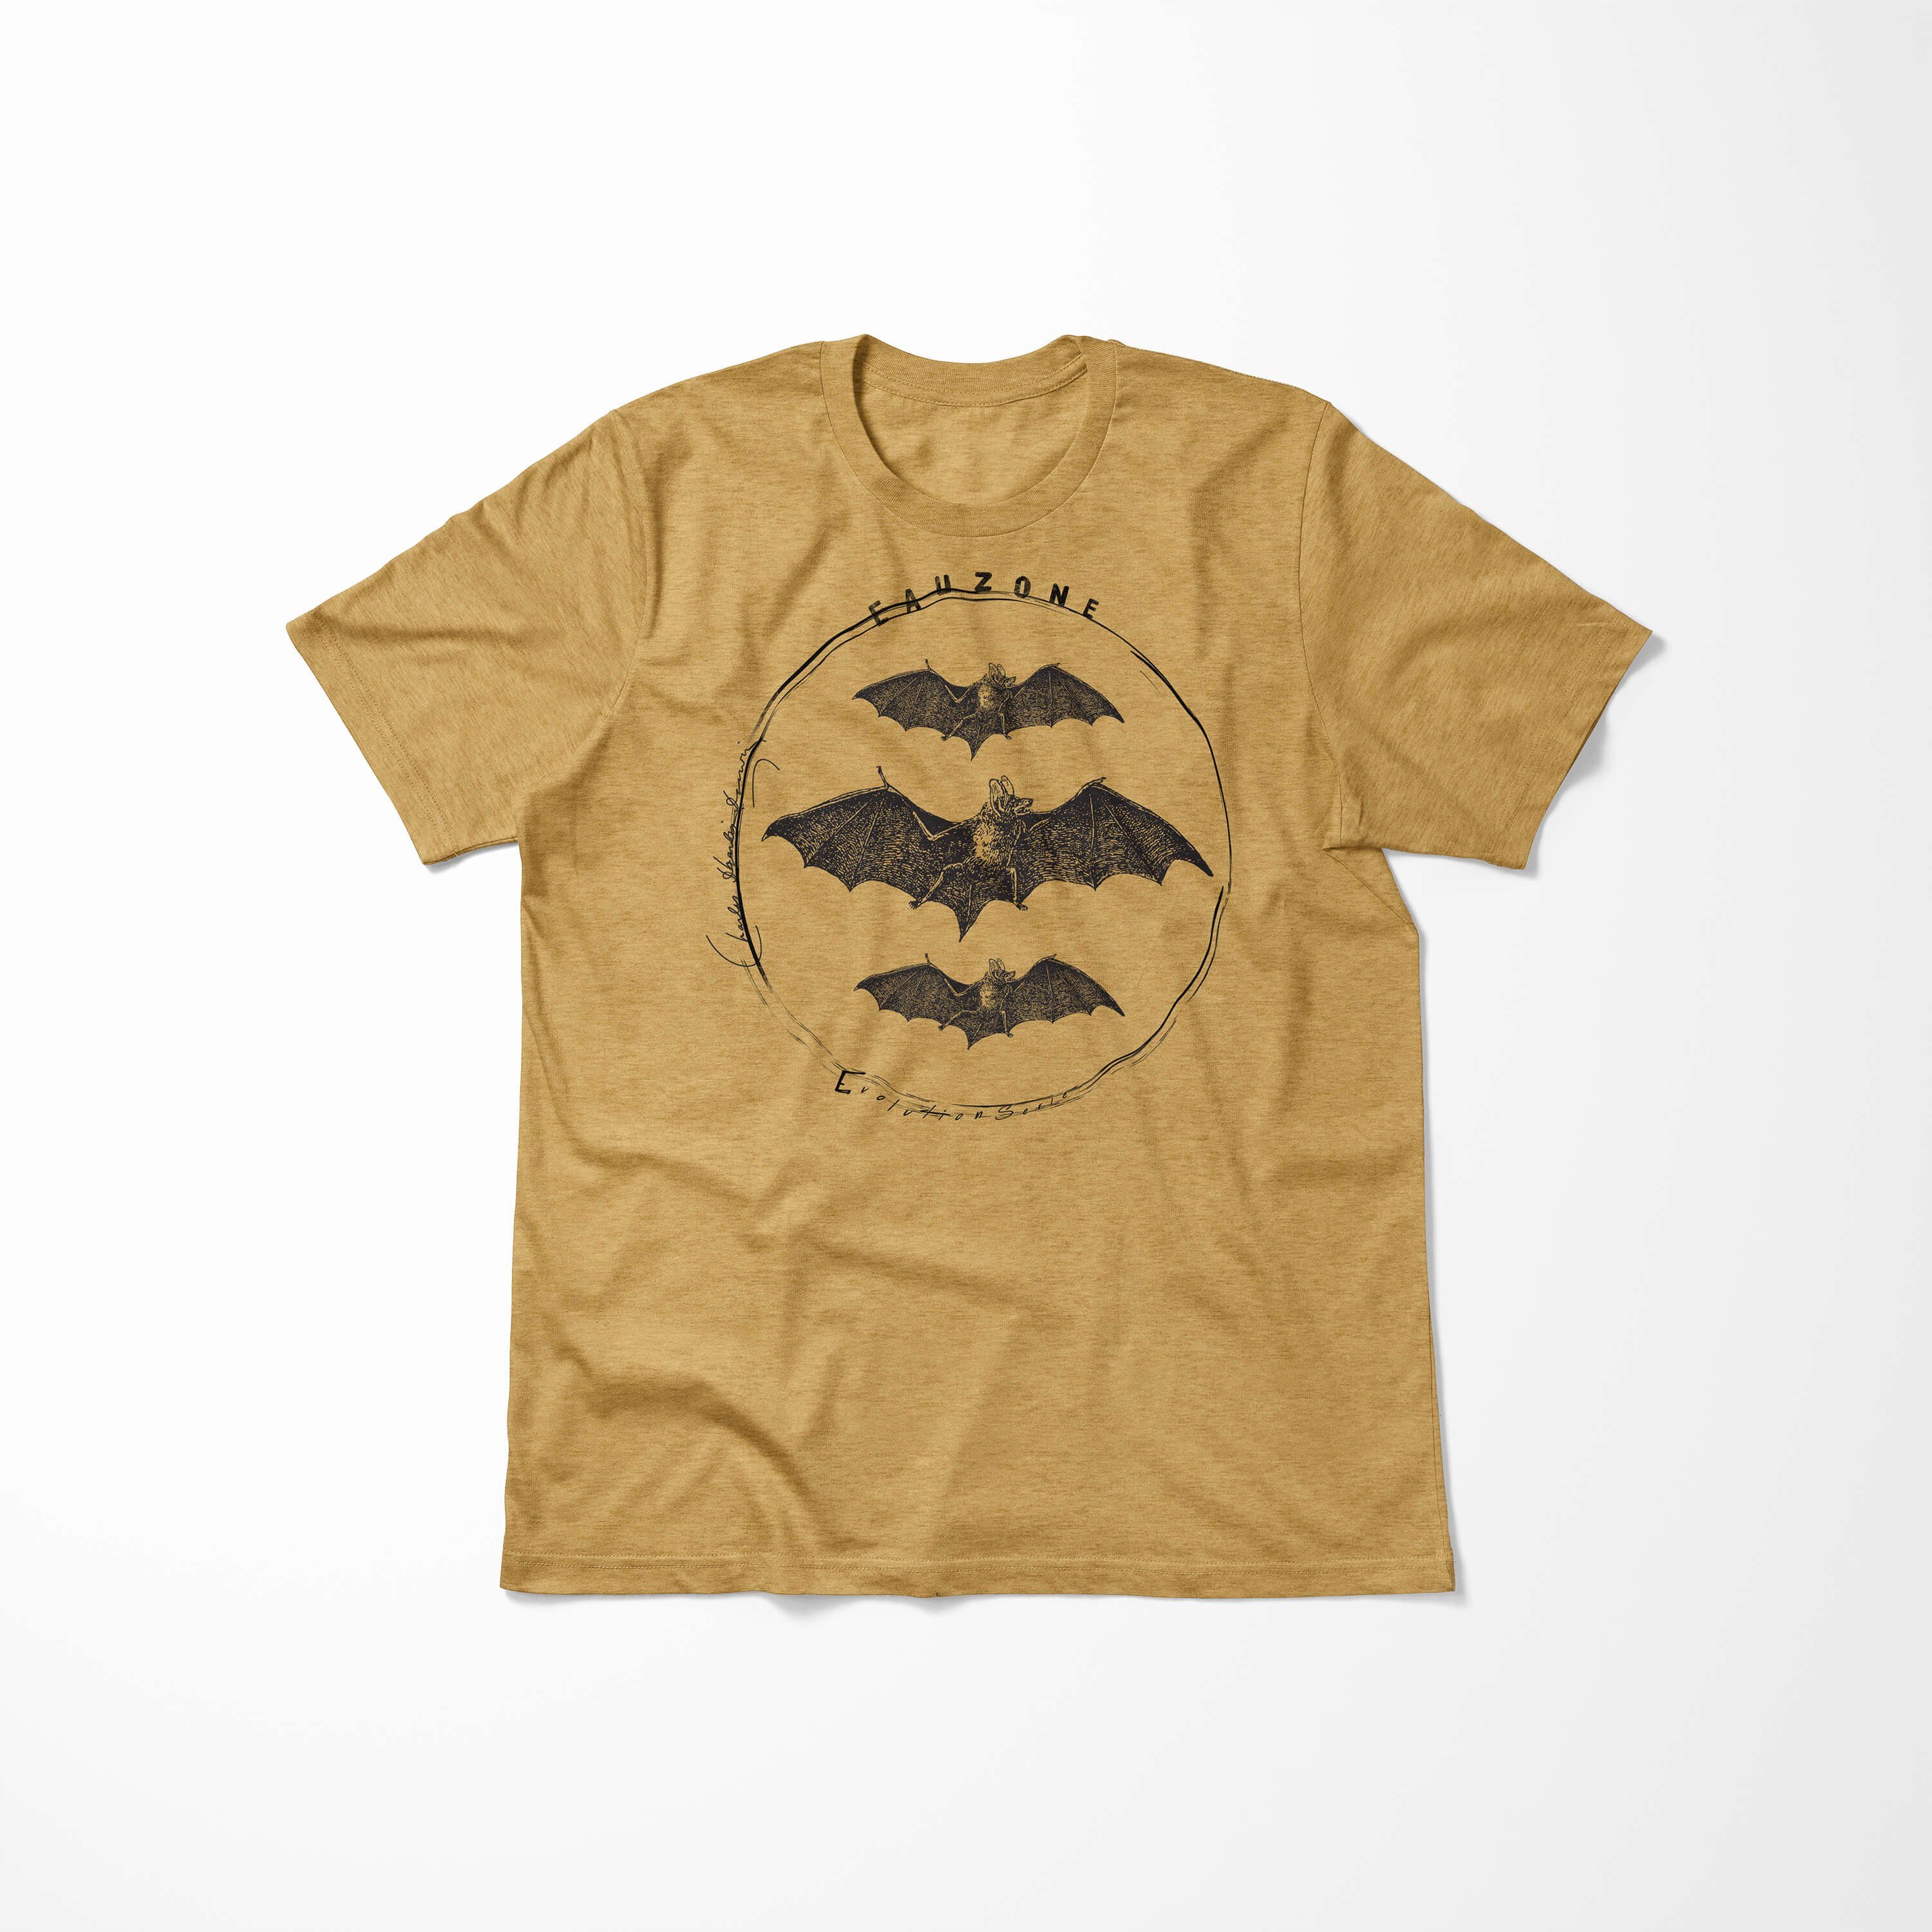 Antique Fledermaus Herren T-Shirt Sinus Art Evolution T-Shirt Gold